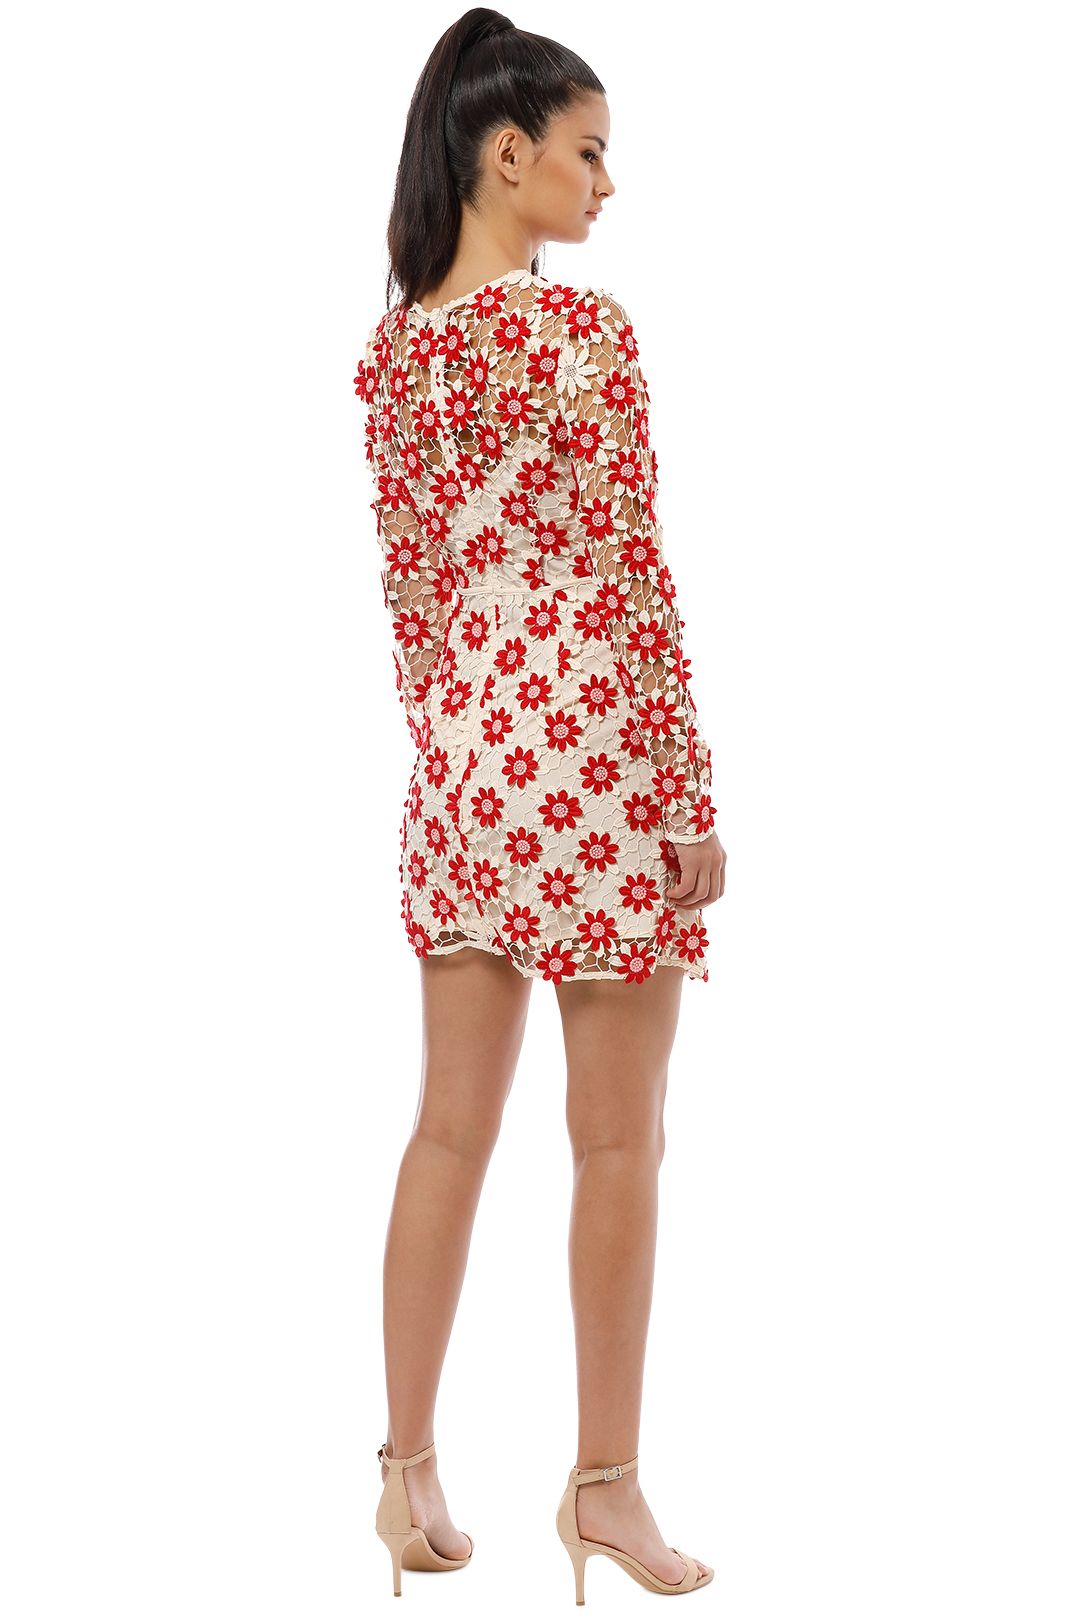 Talulah - Britain LS Mini Dress - Red Cream - Back